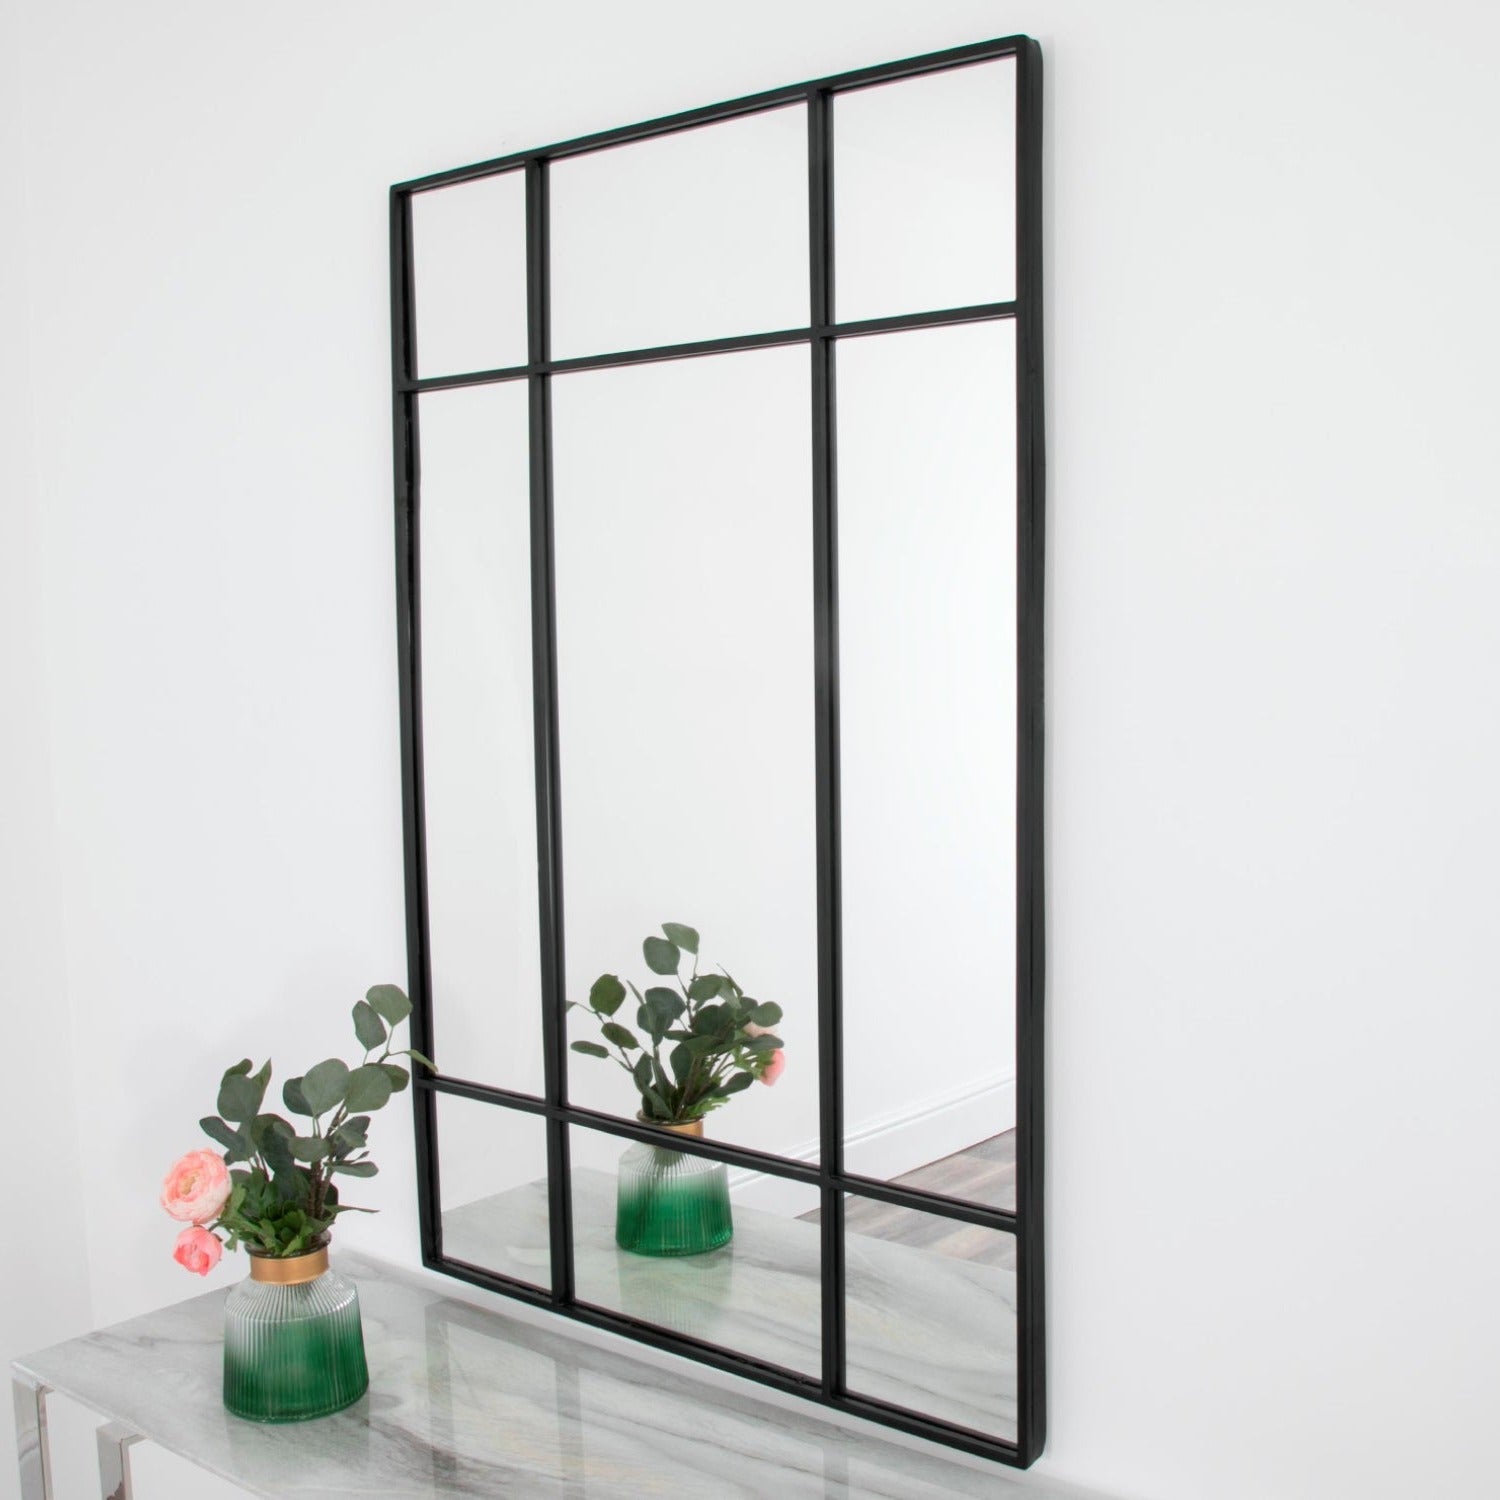 Modern pane mirror - black by Native